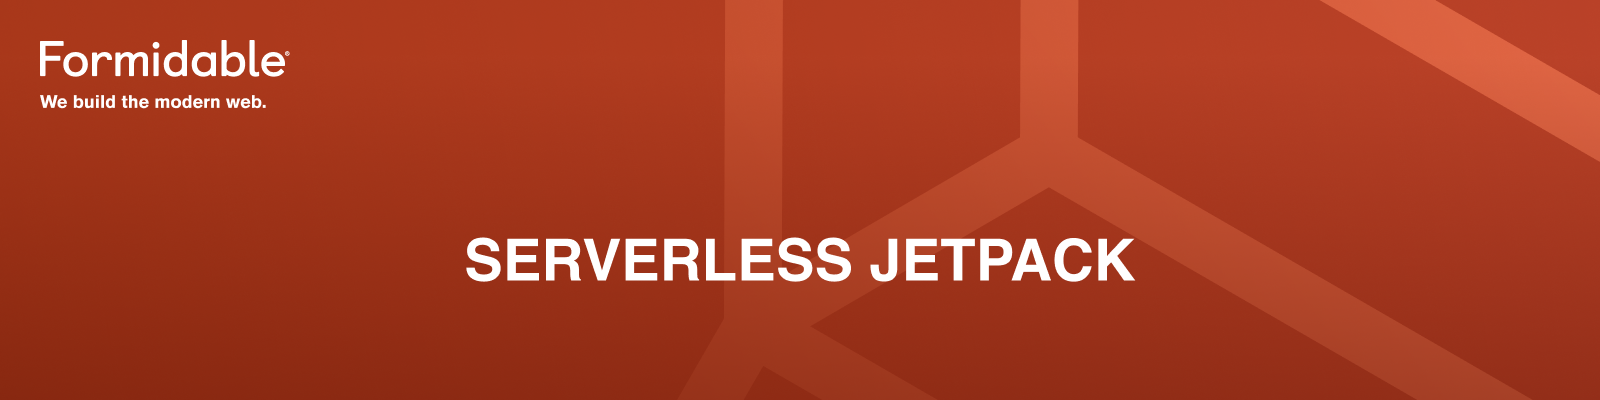 Serverless Jetpack 🚀 — Formidable, We build the modern web